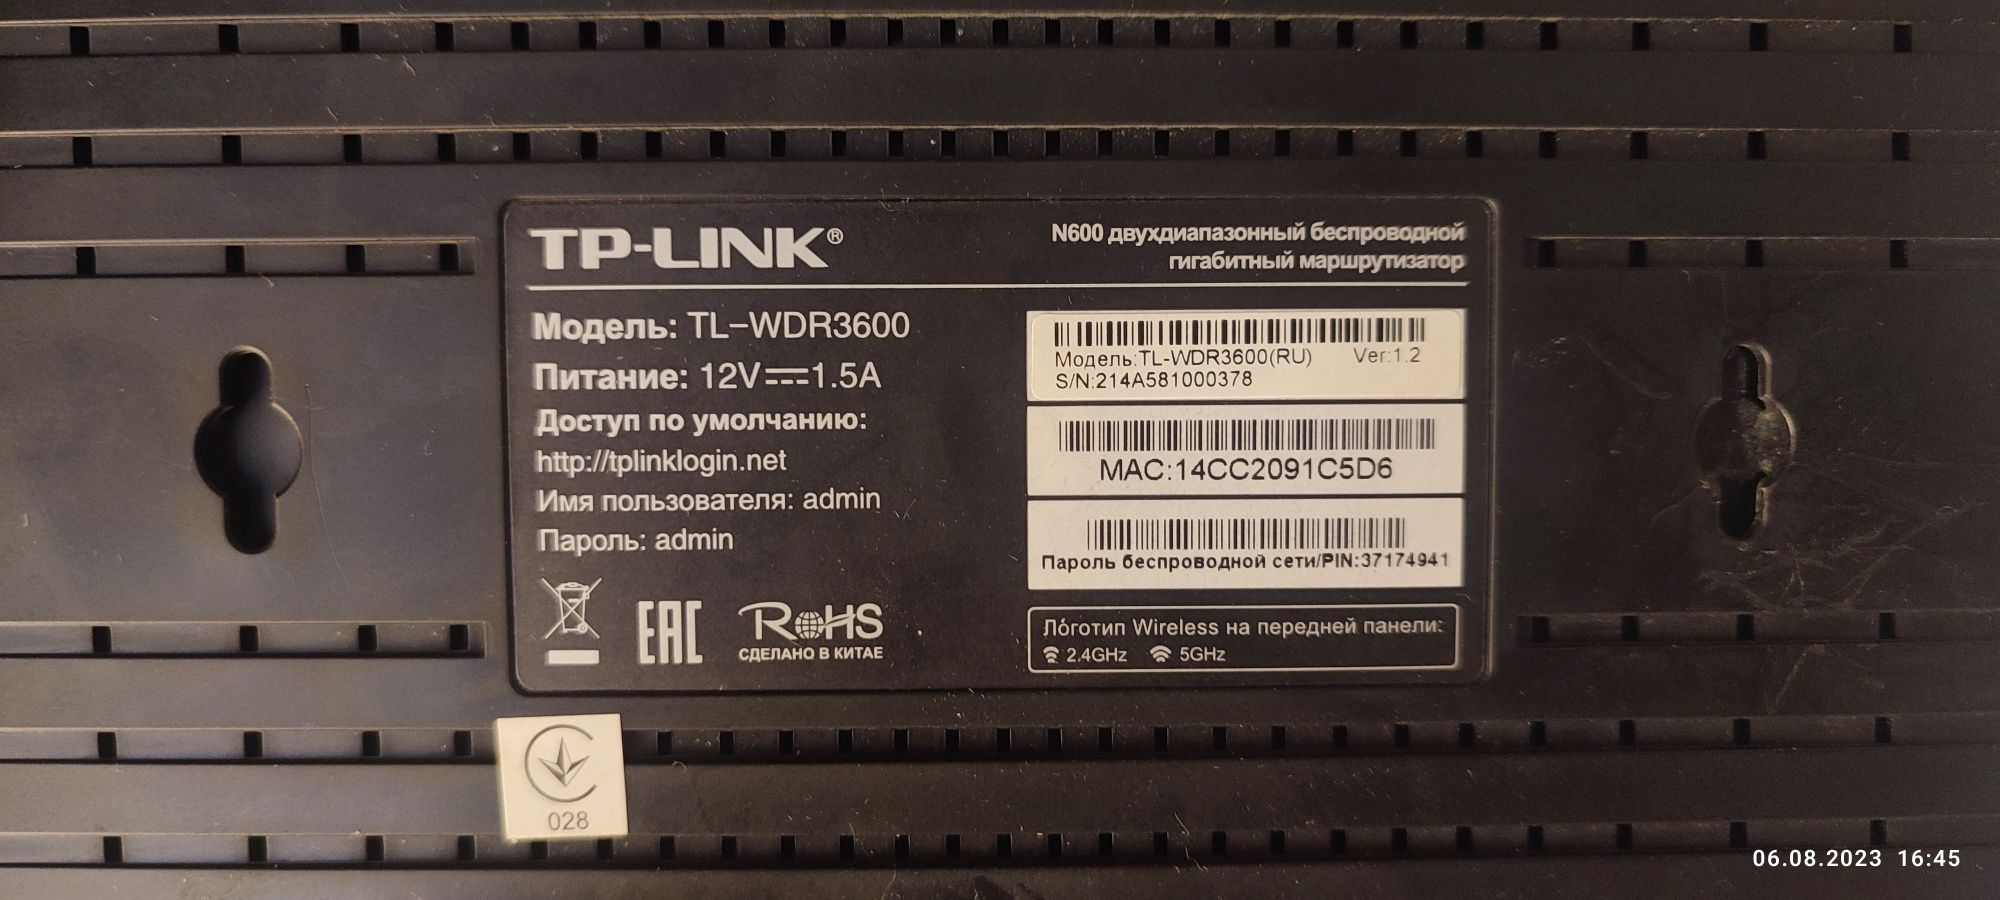 Маршрутизатор TP-LINK N600